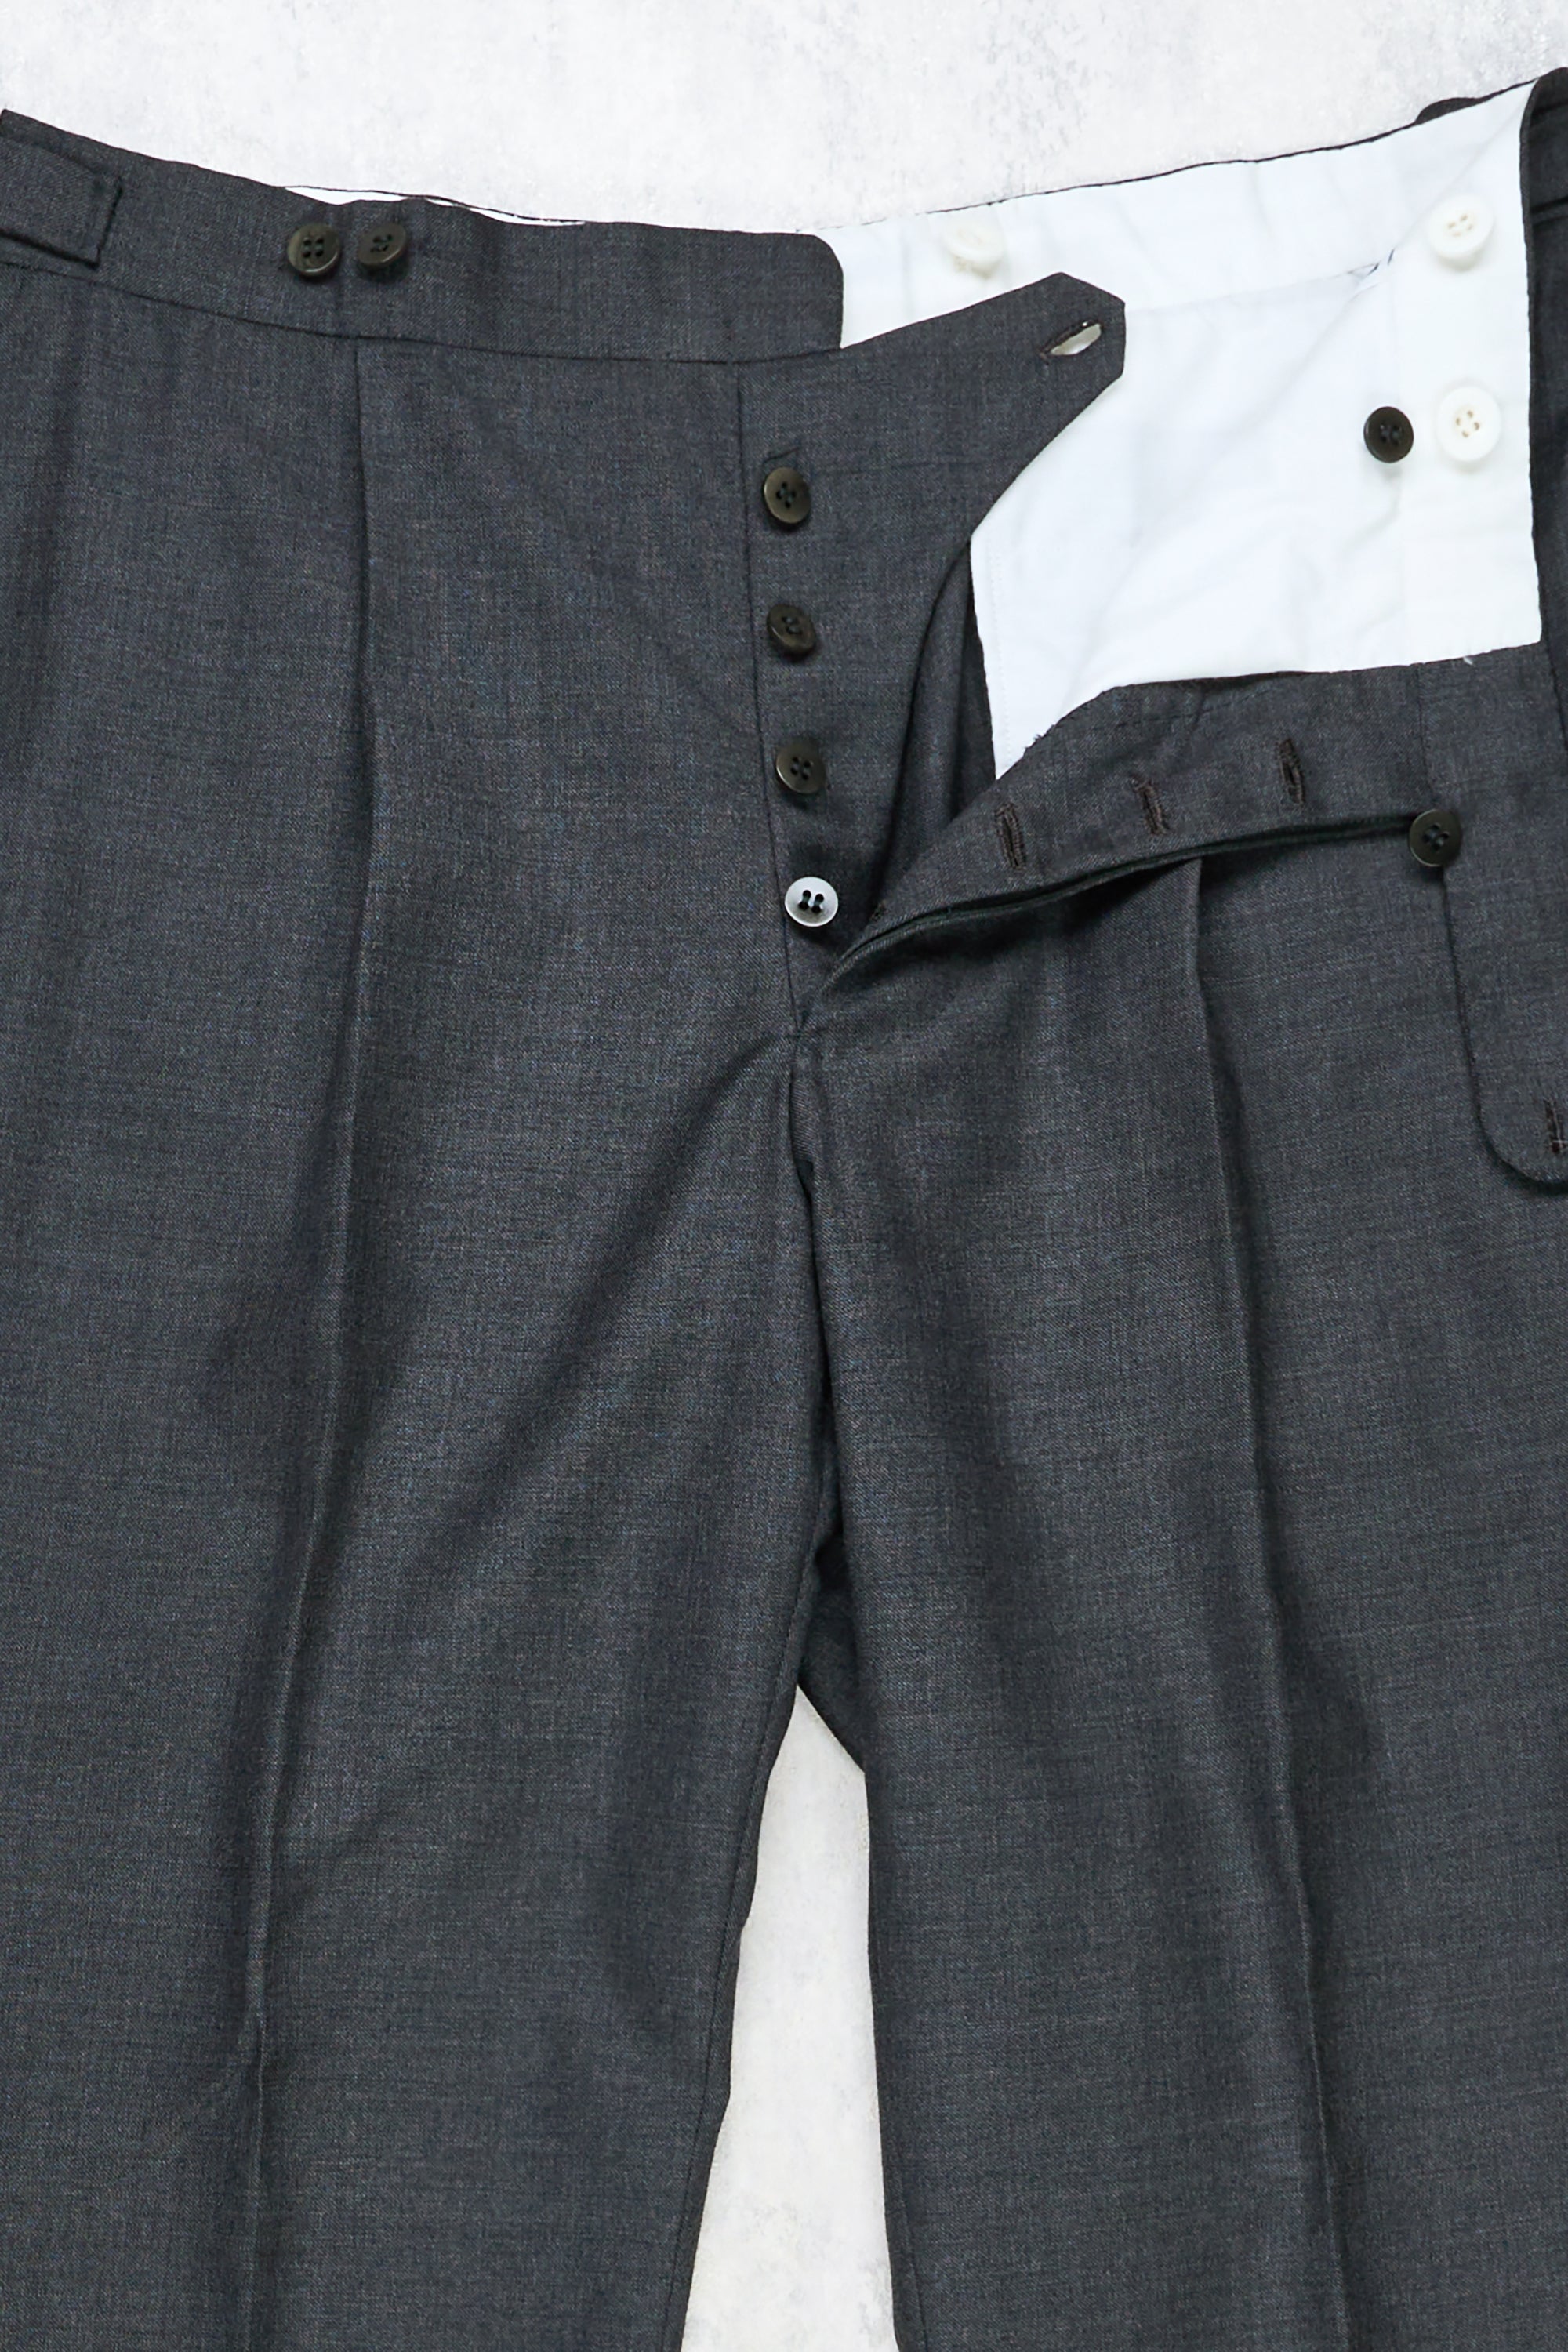 Liverano & Liverano Grey Wool Suit Bespoke